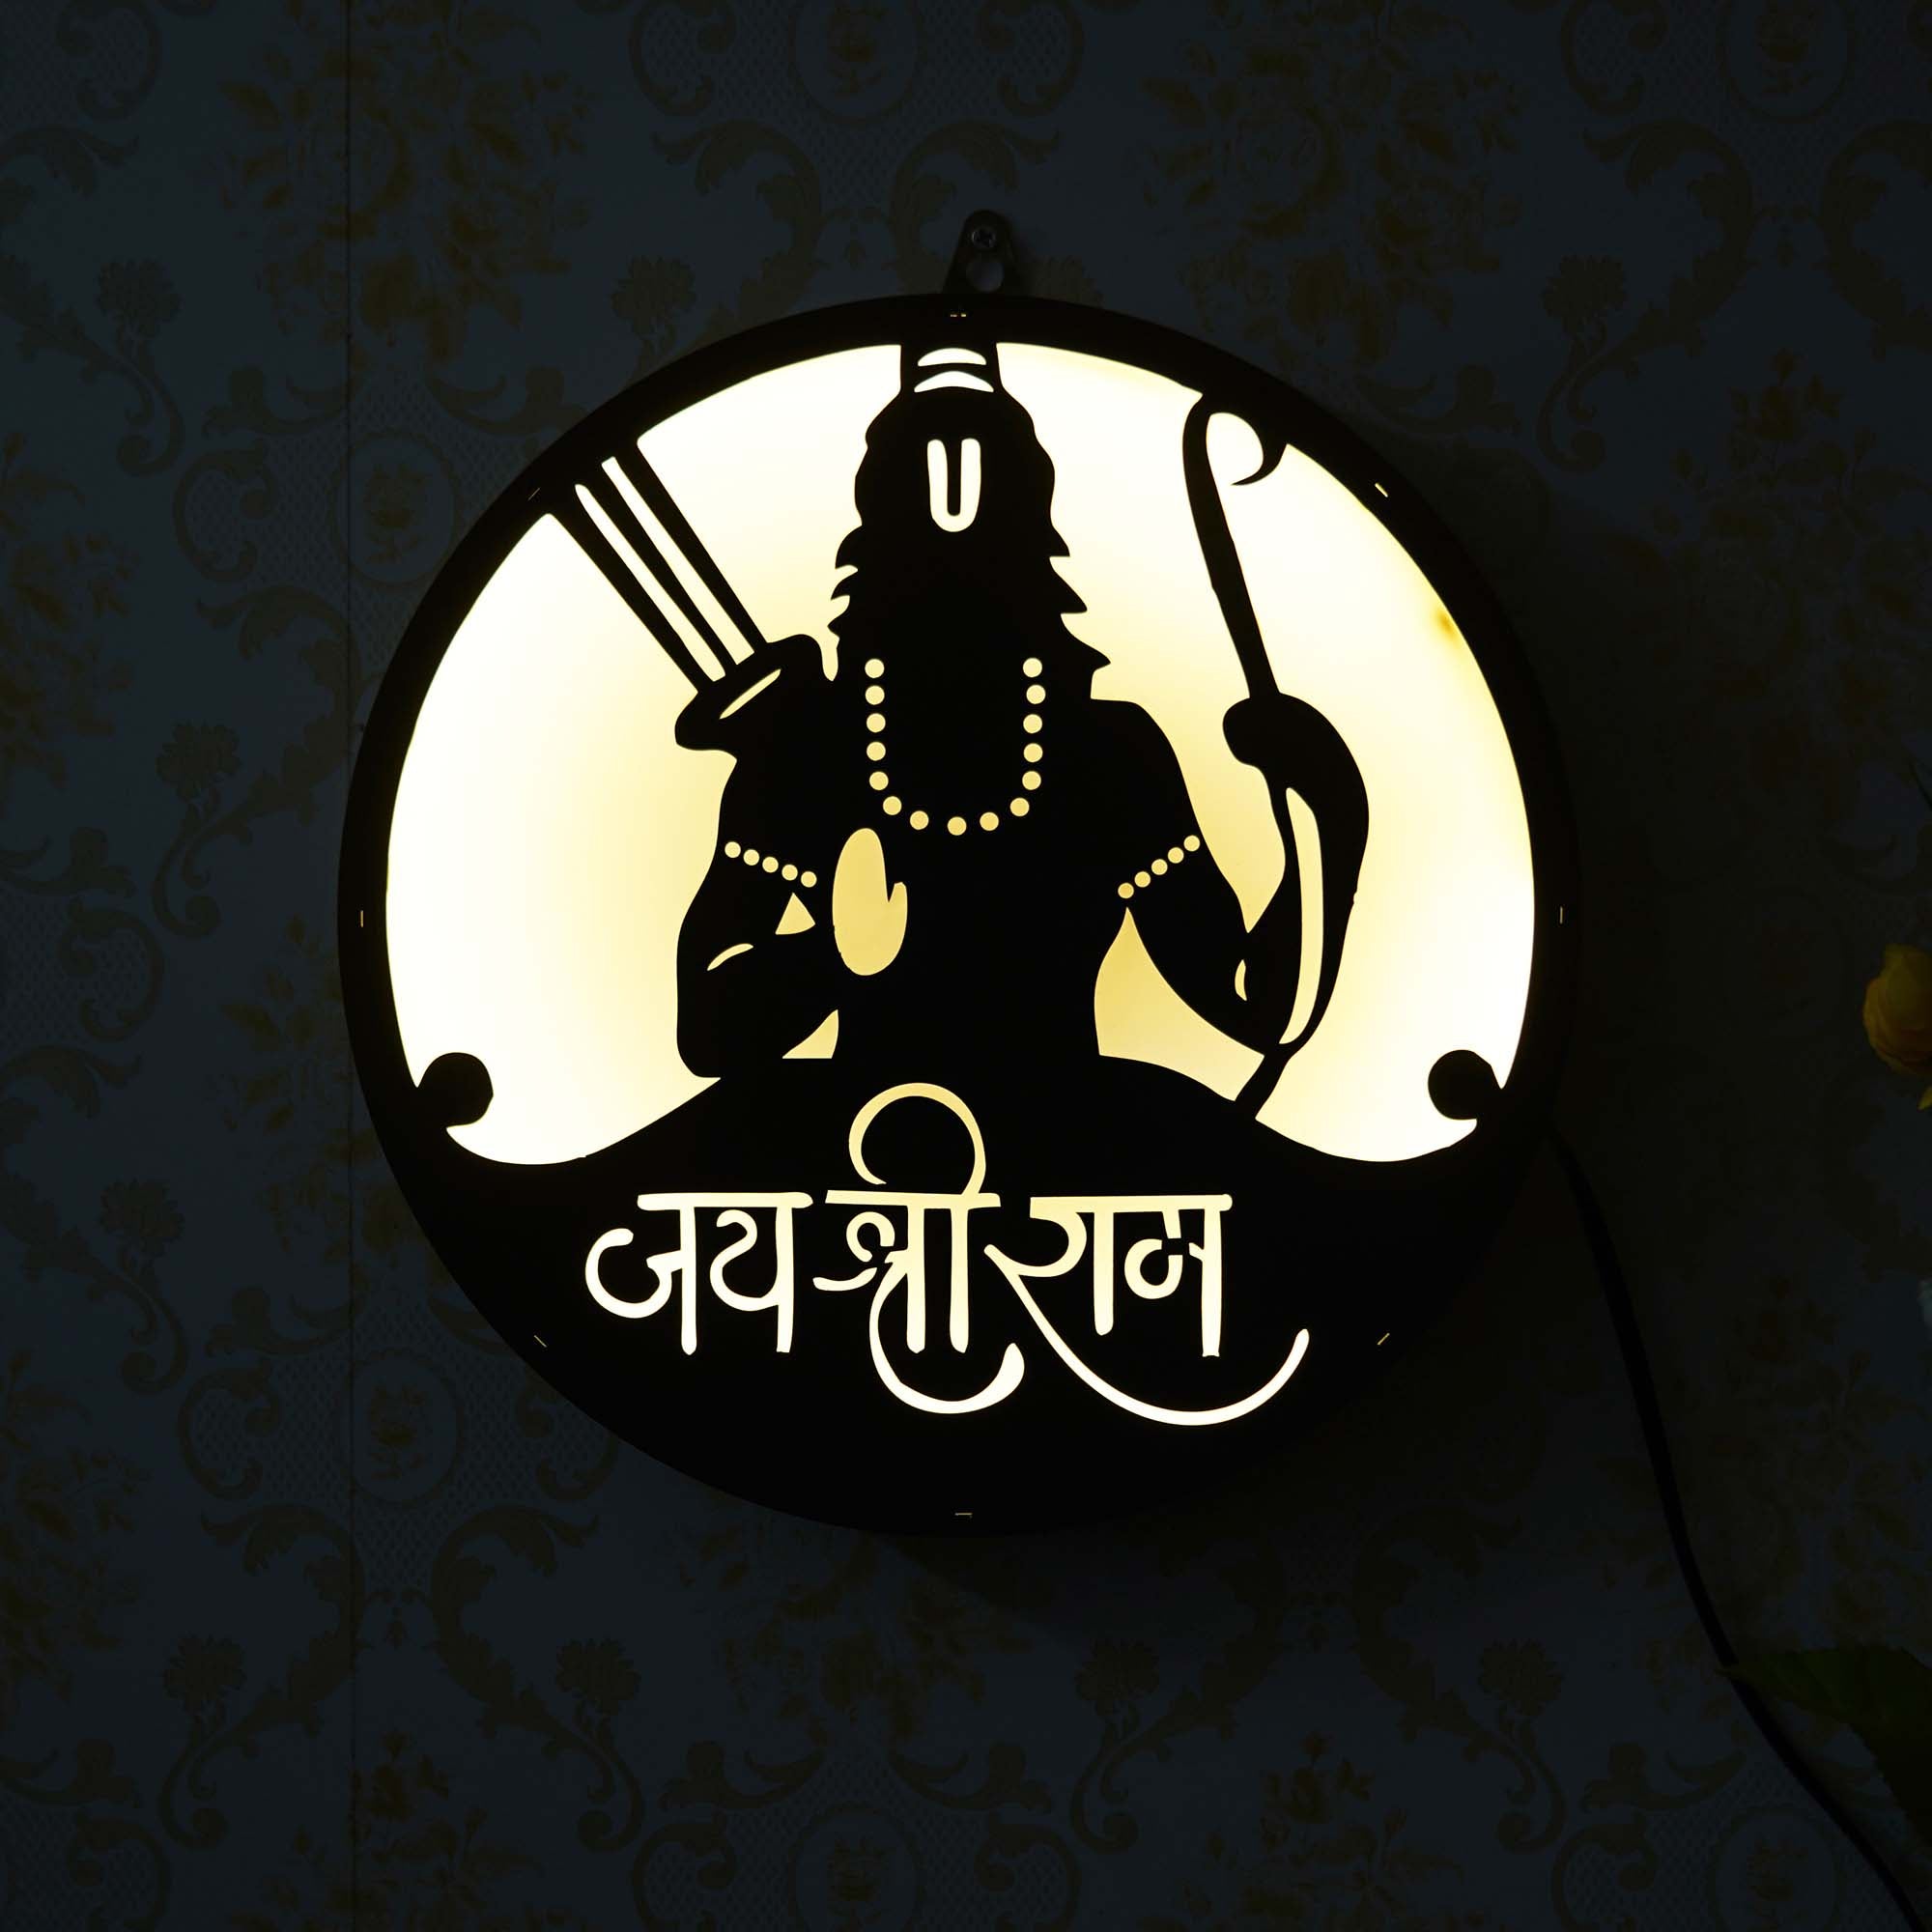 Lord Rama with "Jai Shri Ram" Wooden Cutout LED Light Lamp Wall Hanging 4